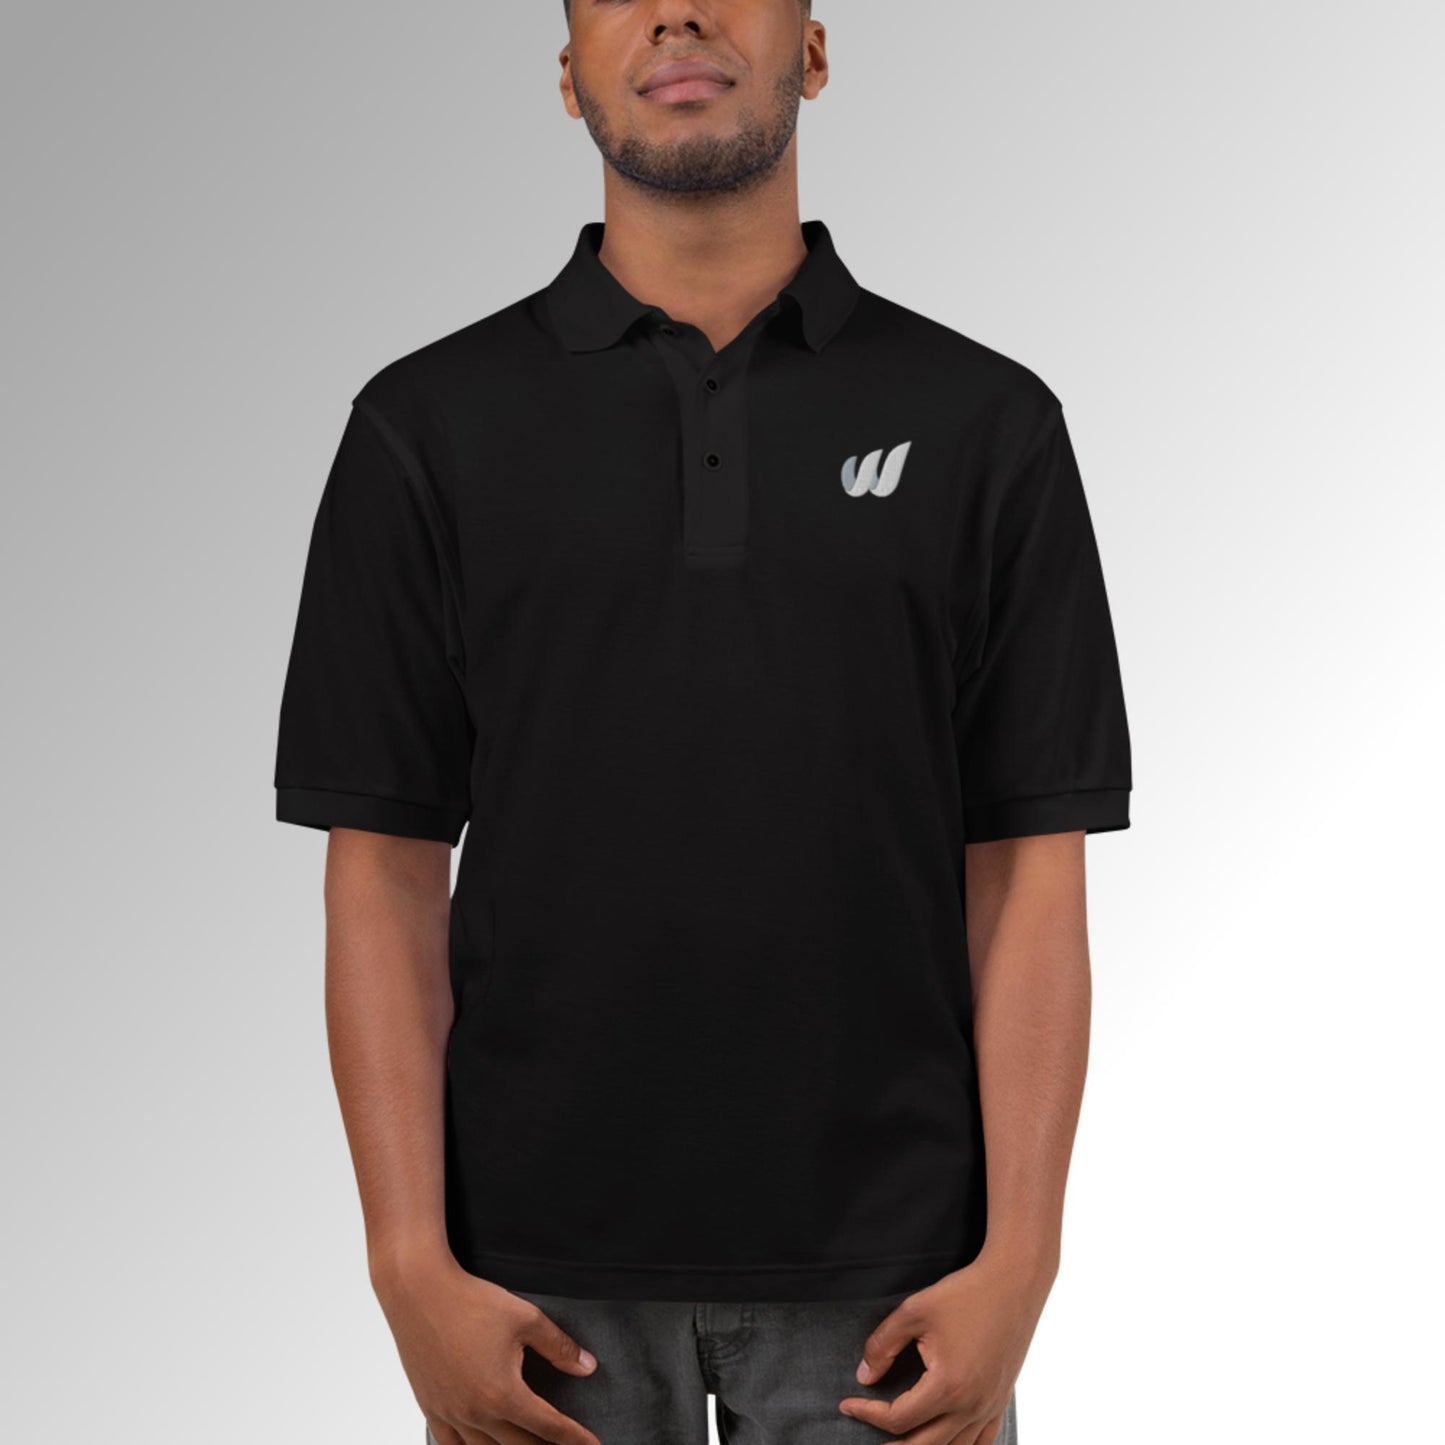 WM Embroidered Premium Polo Shirt